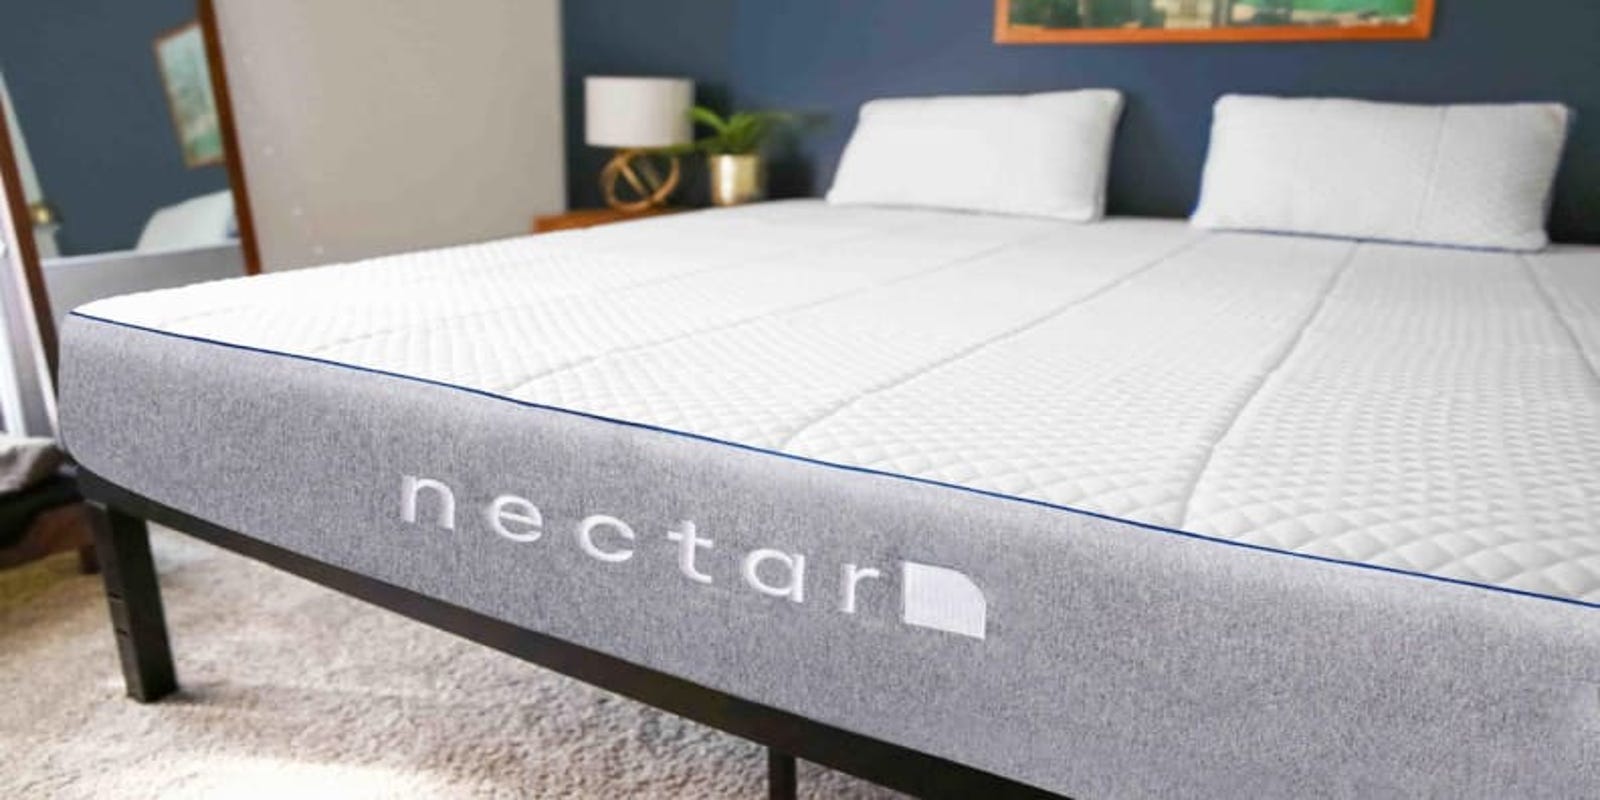 nectar mattress sale tomorrow